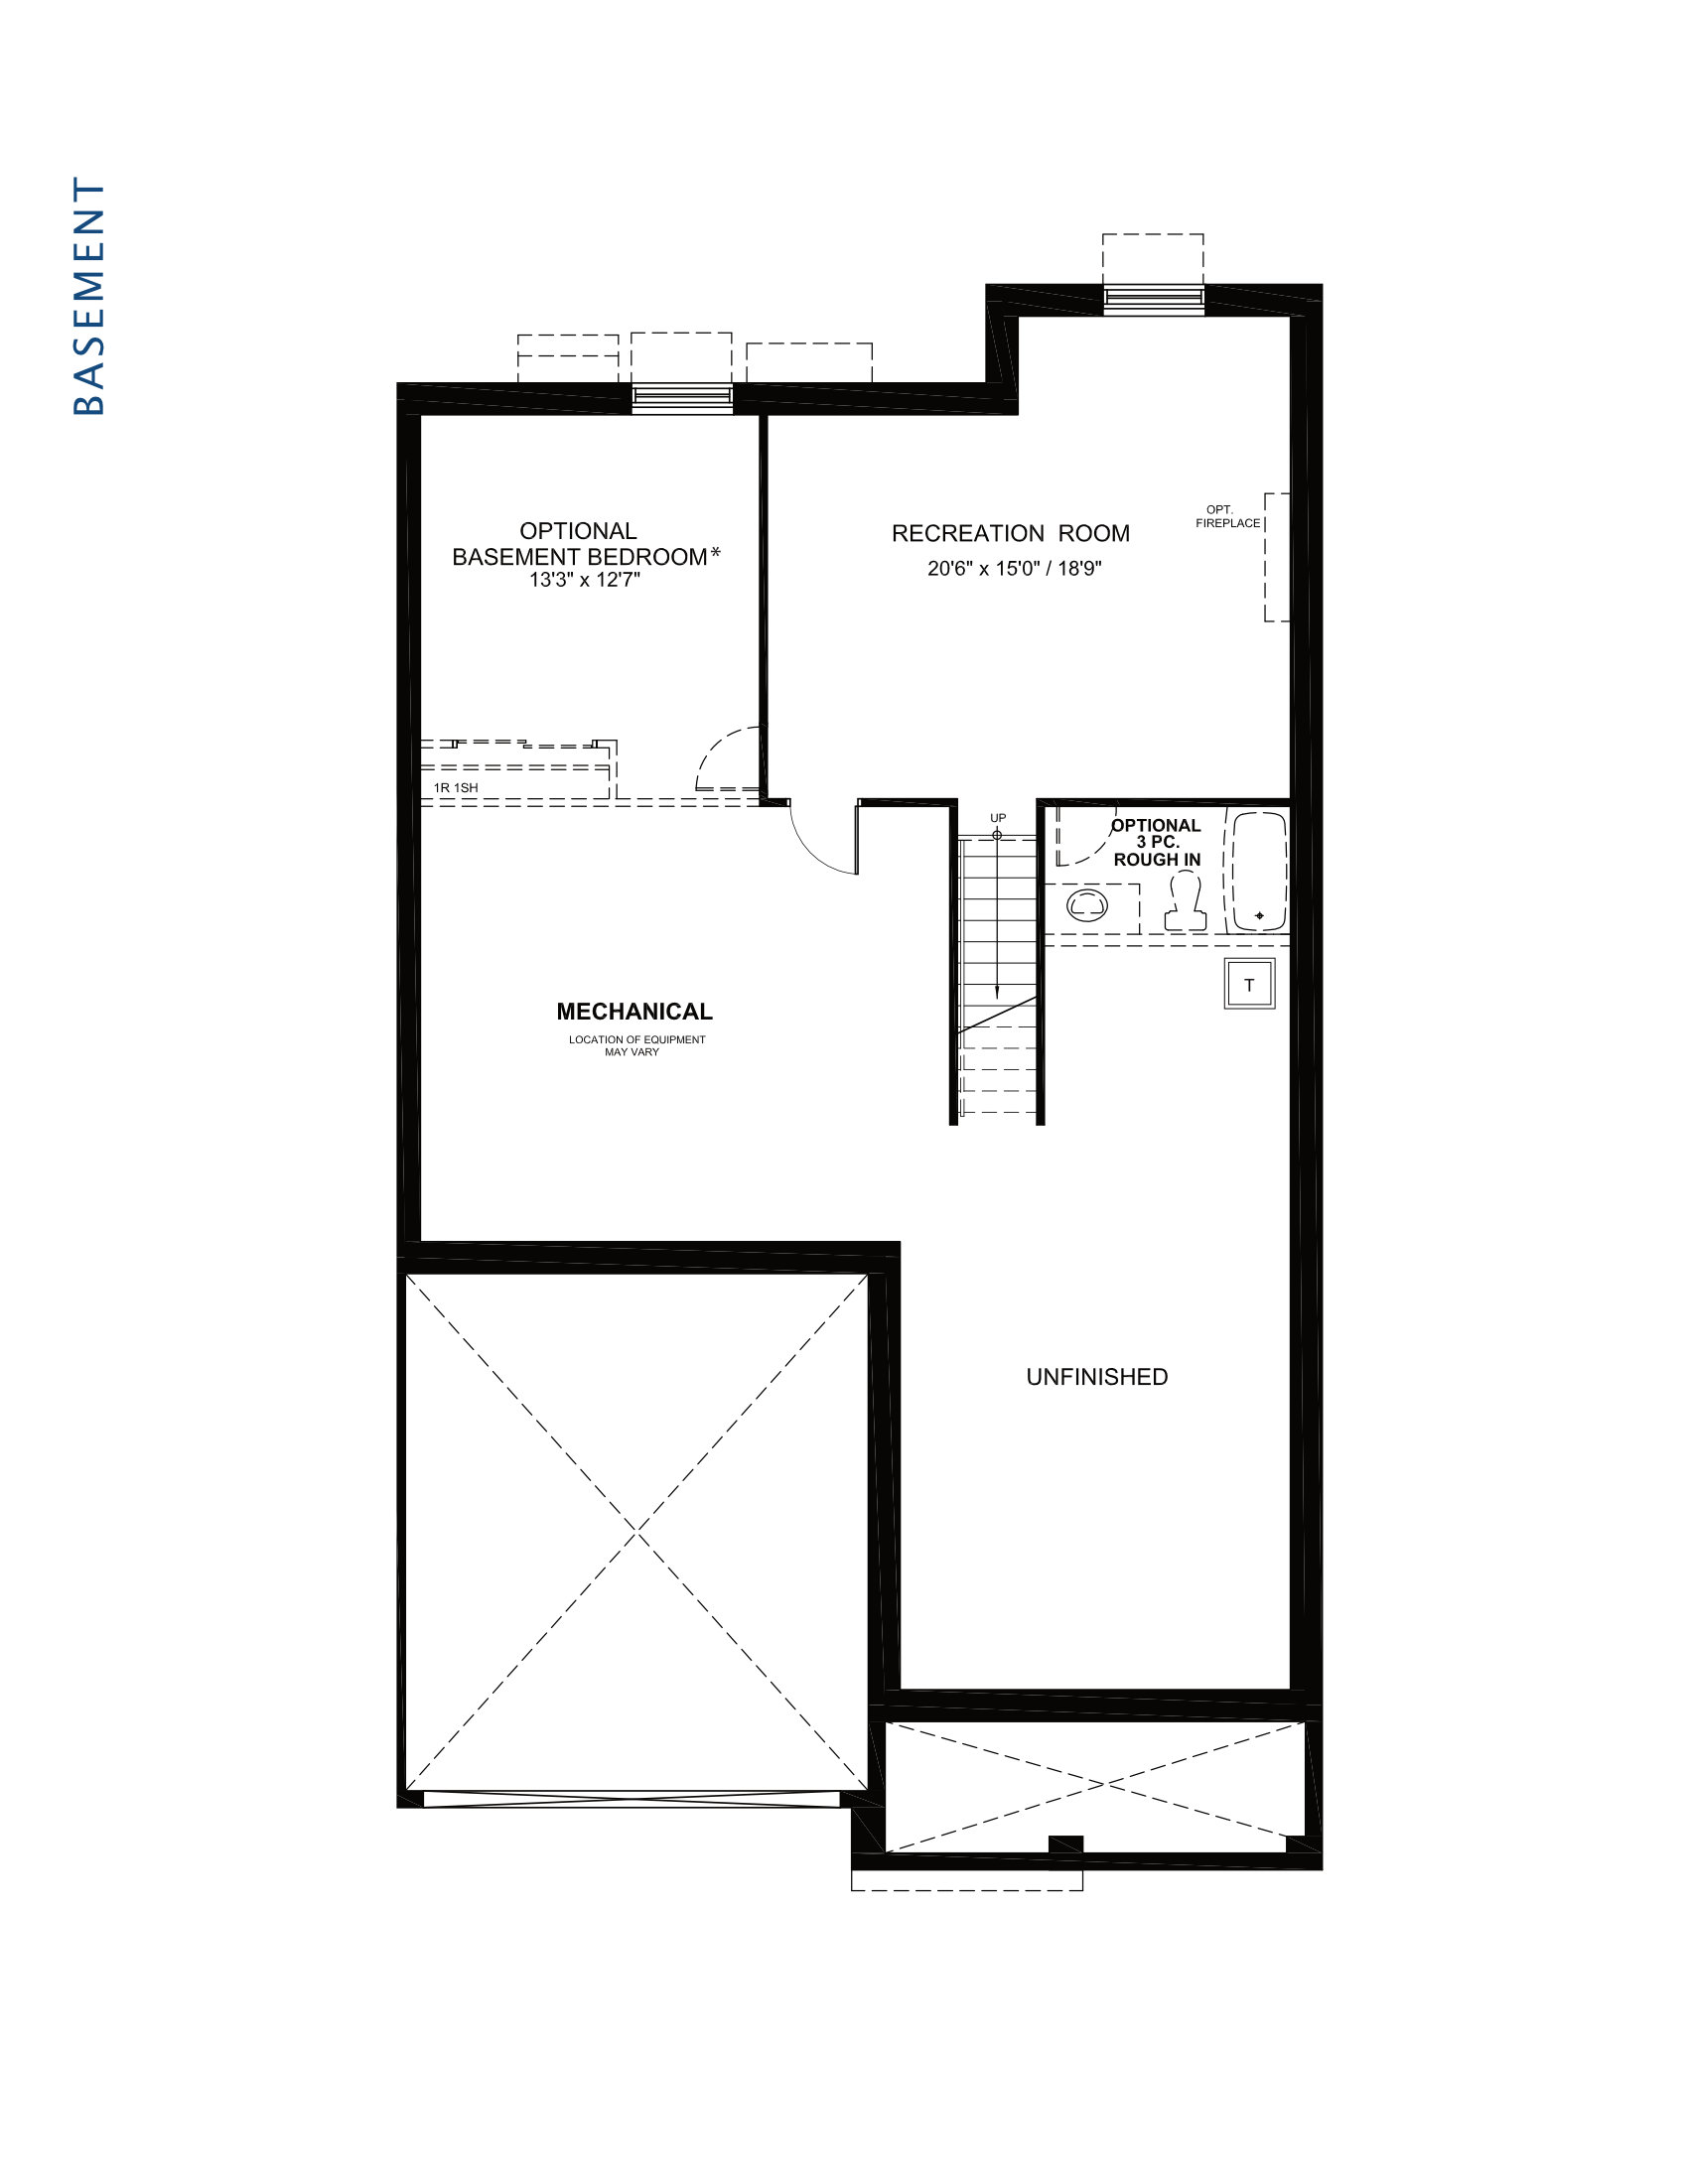 Floorplan Basement Level - Linden